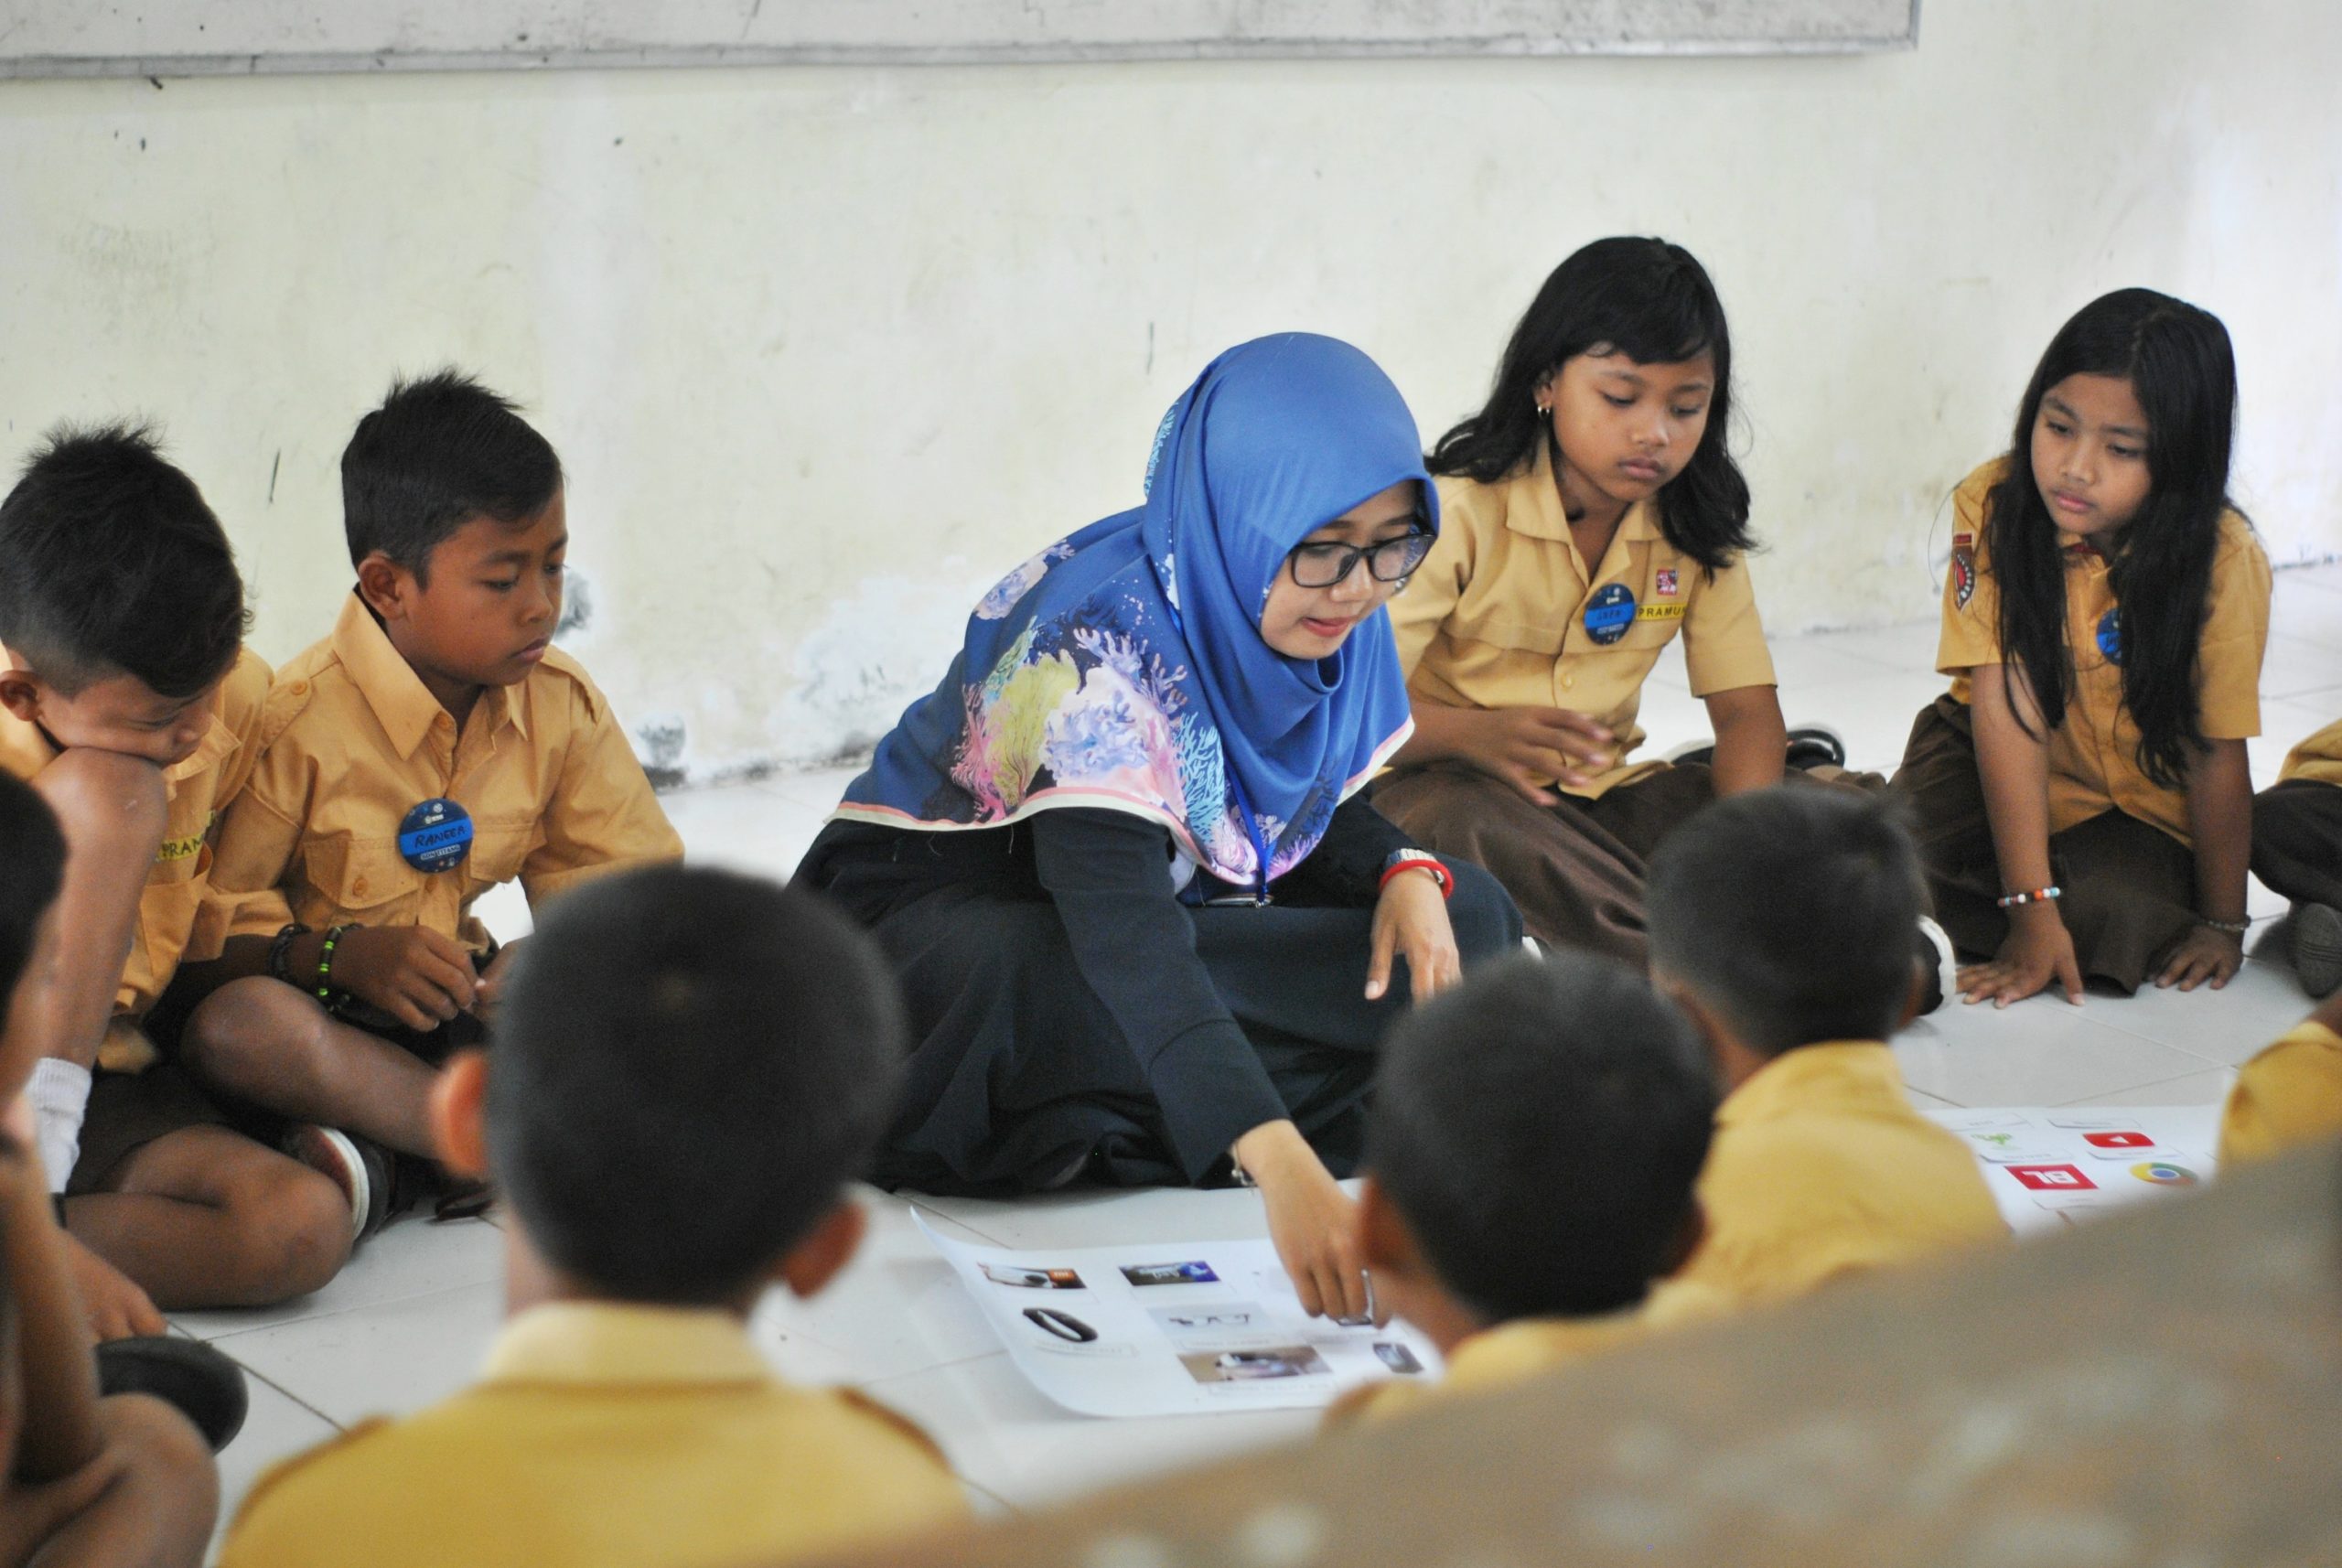 Children studying together